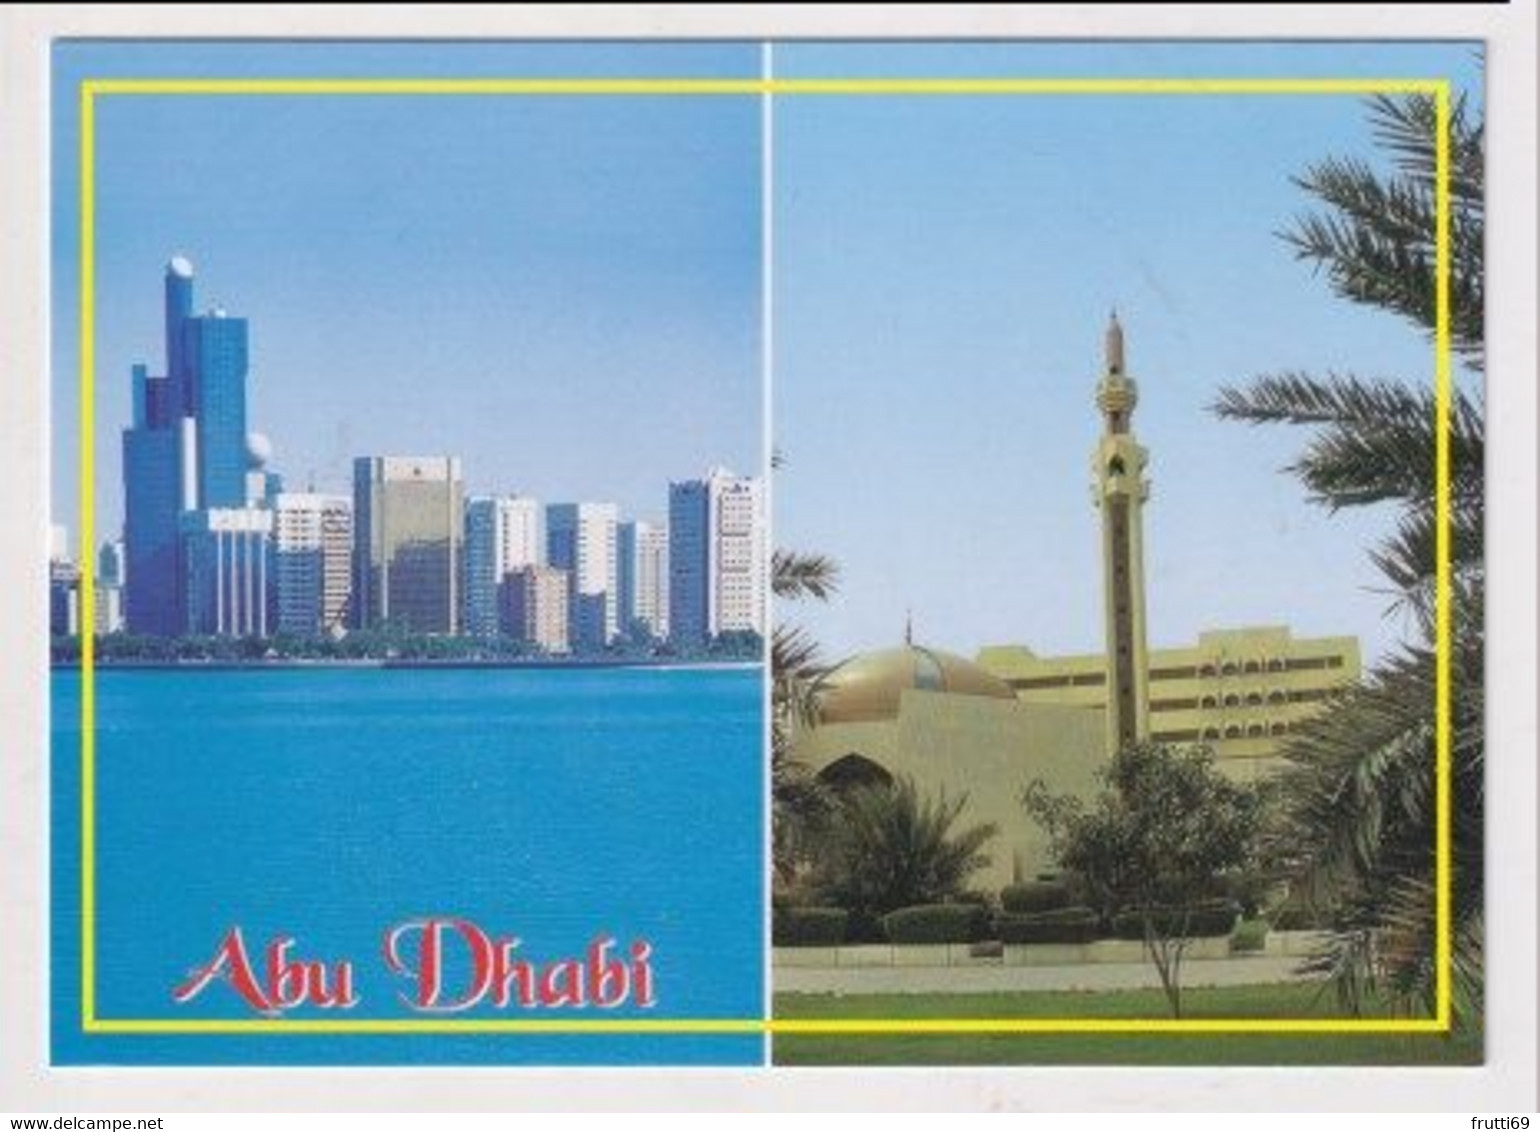 AK 029973 UNITED ARAB EMIRATES - Abu Dhabi - Verenigde Arabische Emiraten